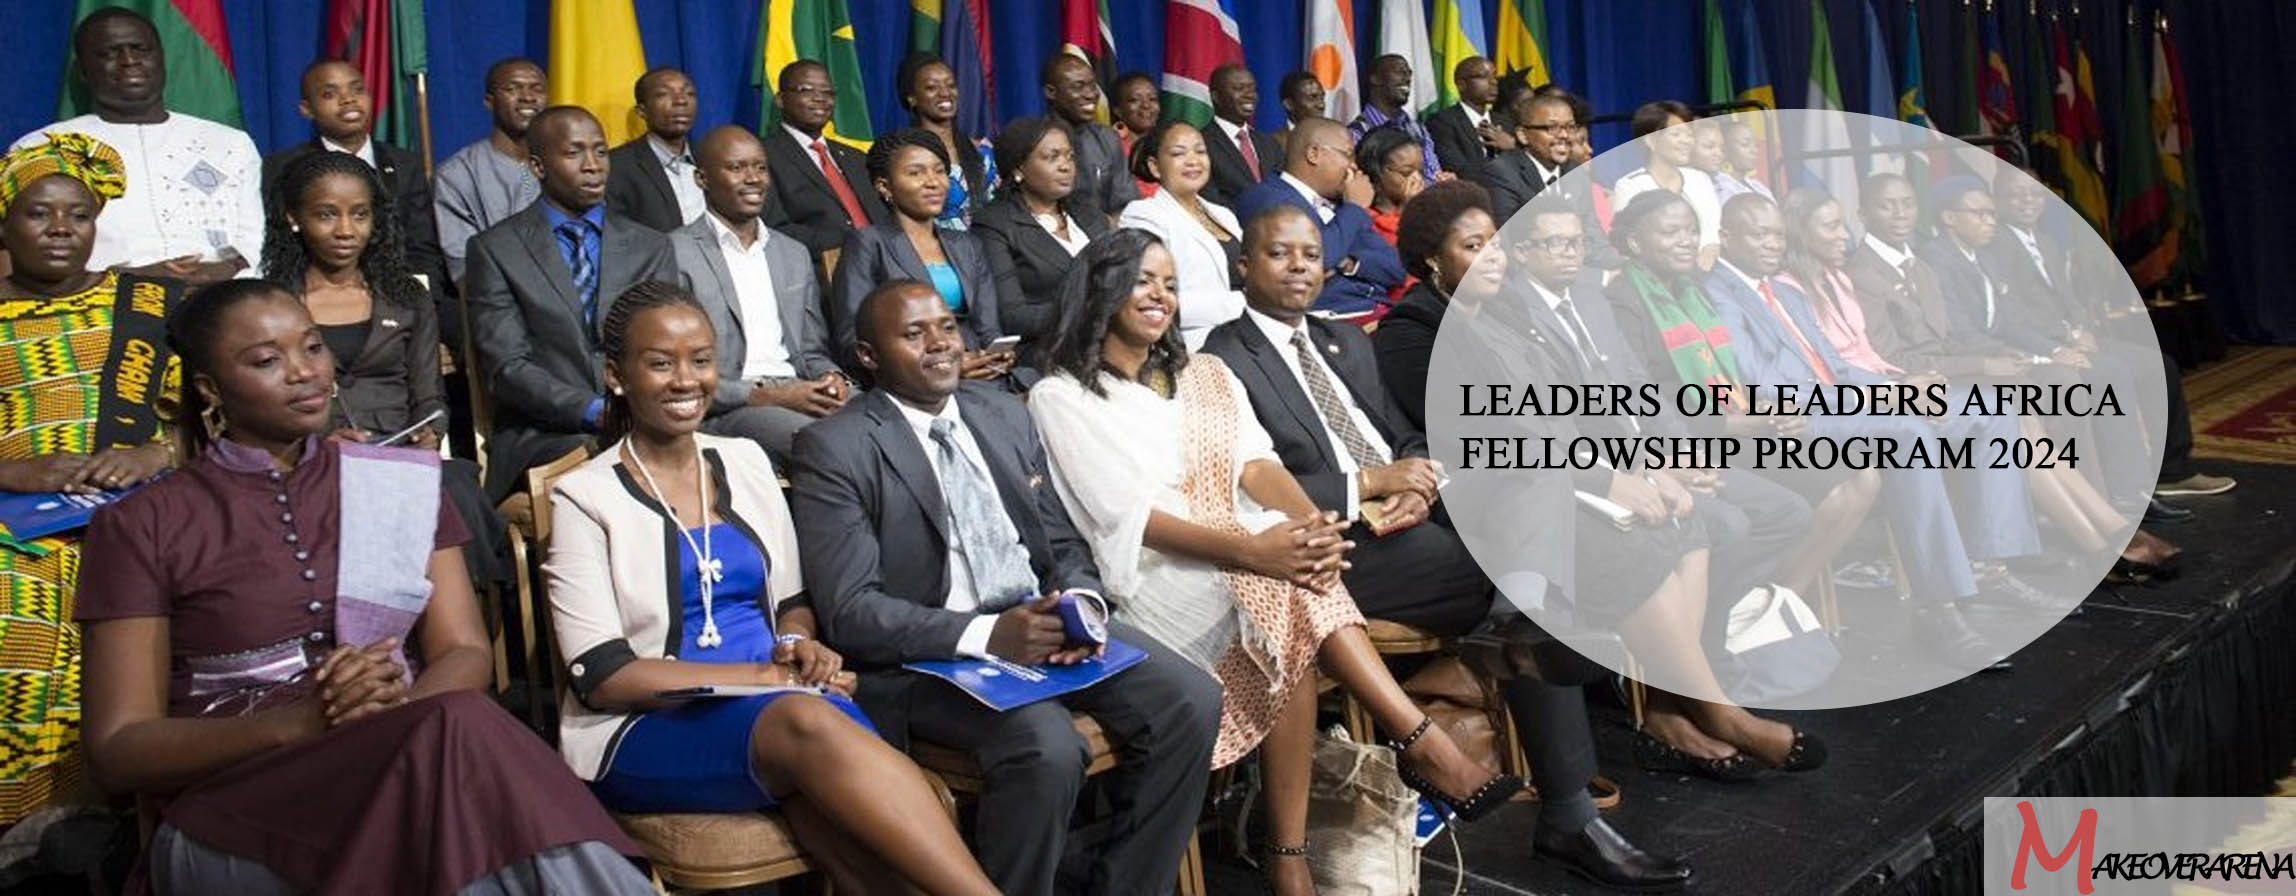 Leaders of Leaders Africa Fellowship Program 2024